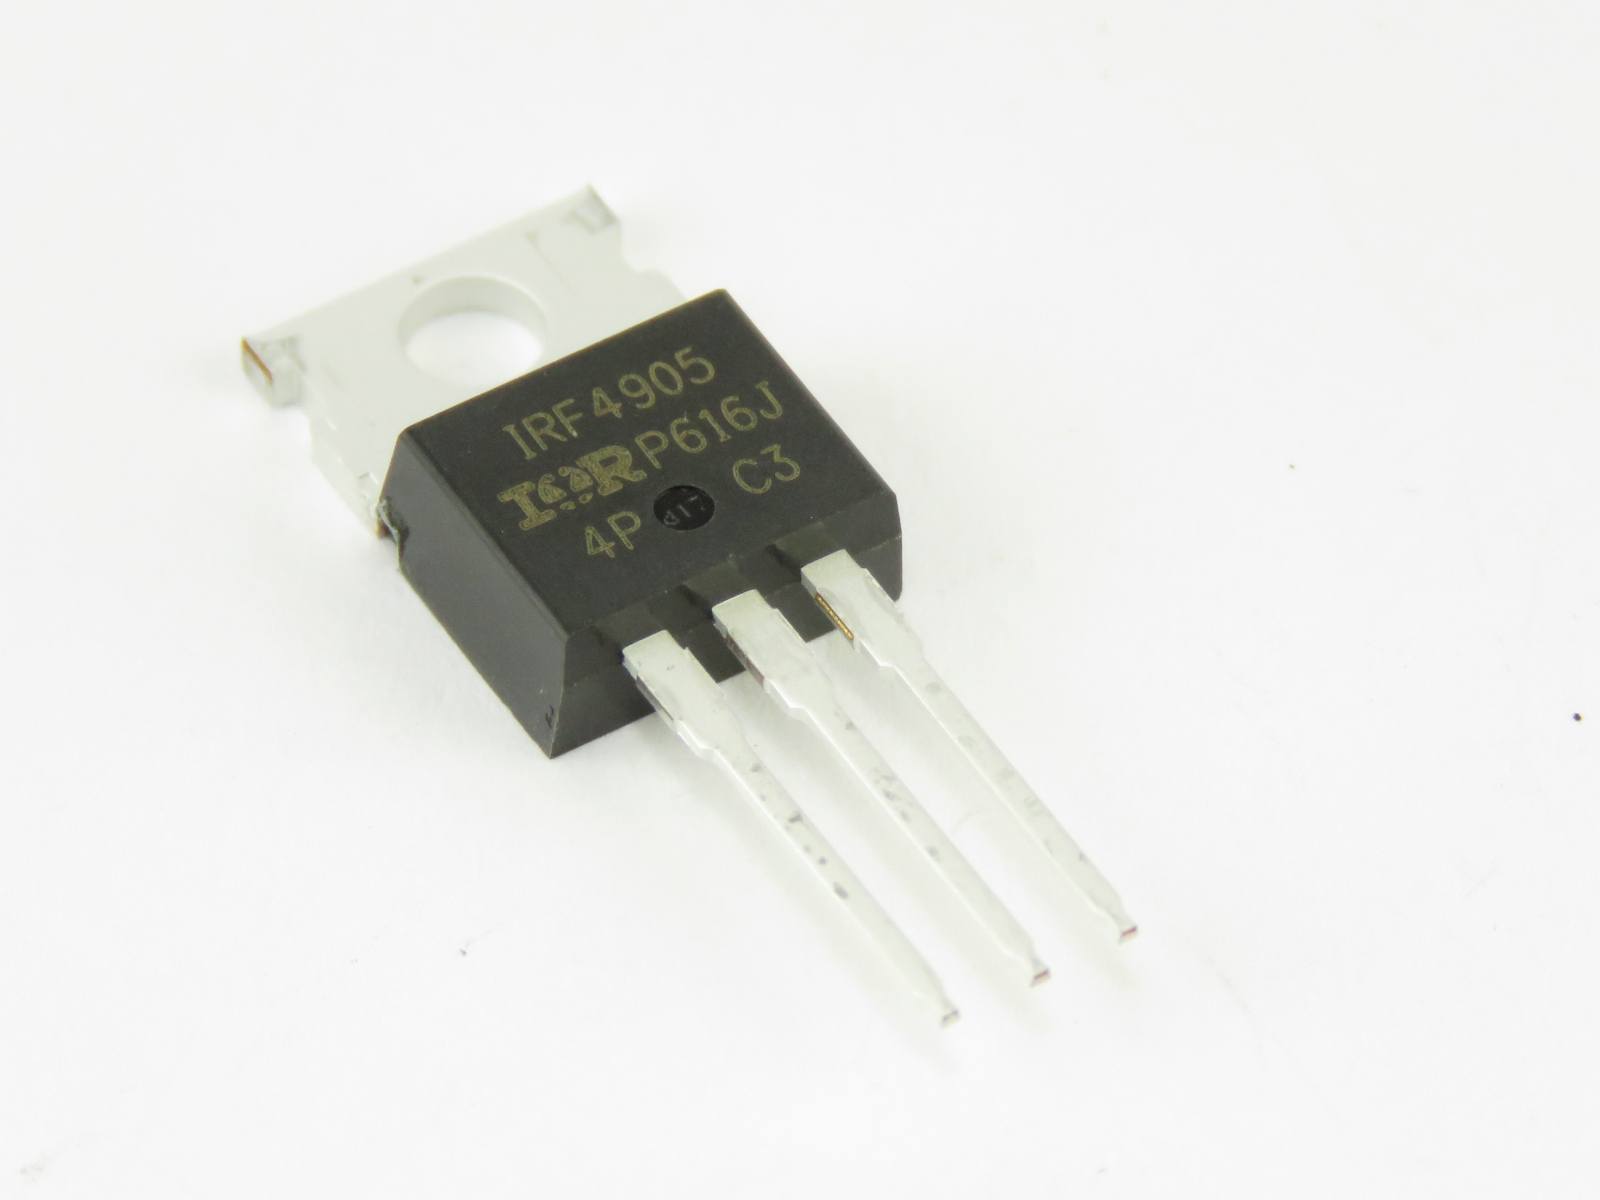 Transistor IRF4905